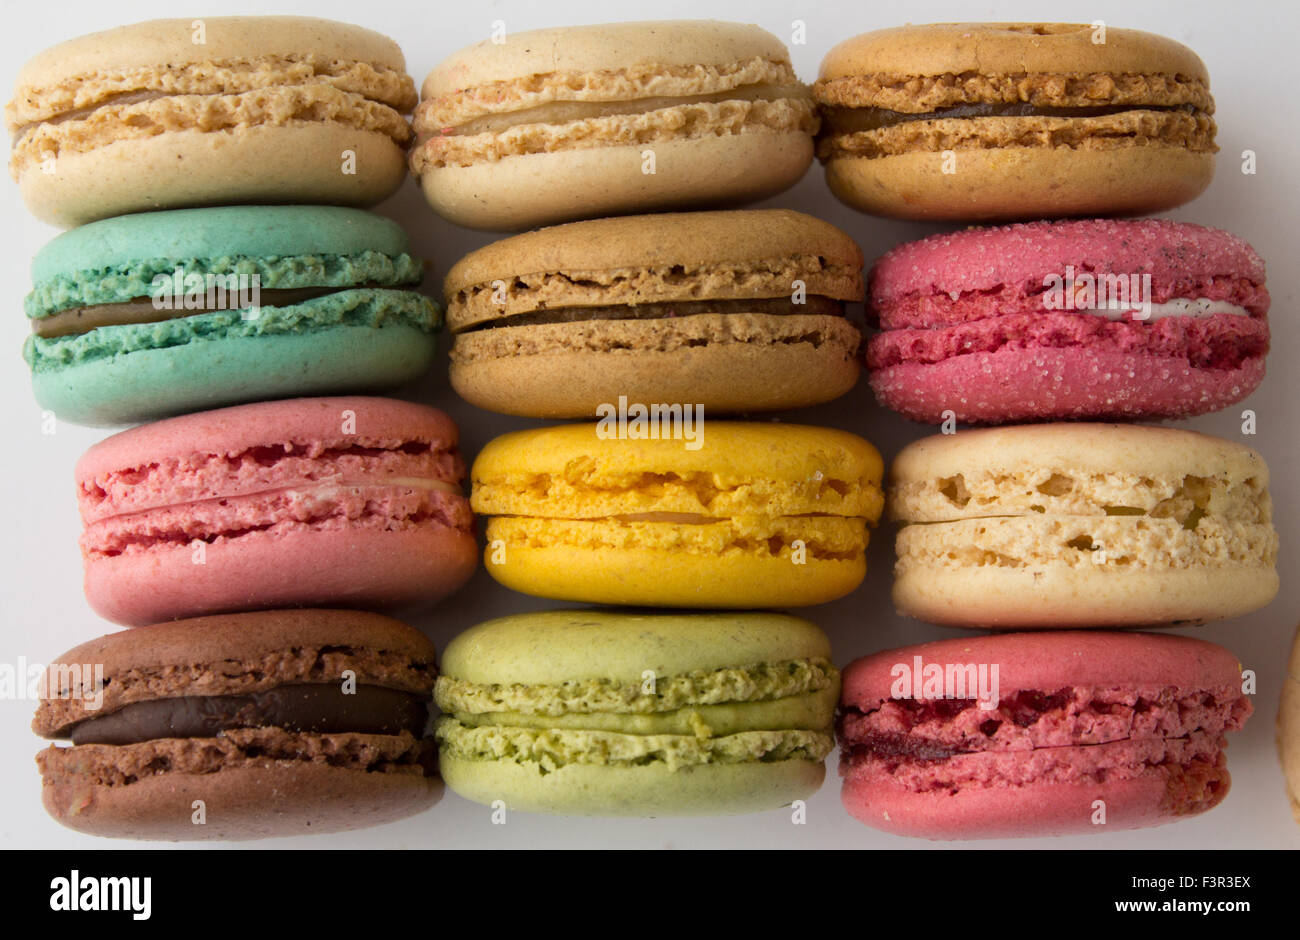 Macarons Kekse - französische Kuchen/Kekse Gebäck Stockfoto